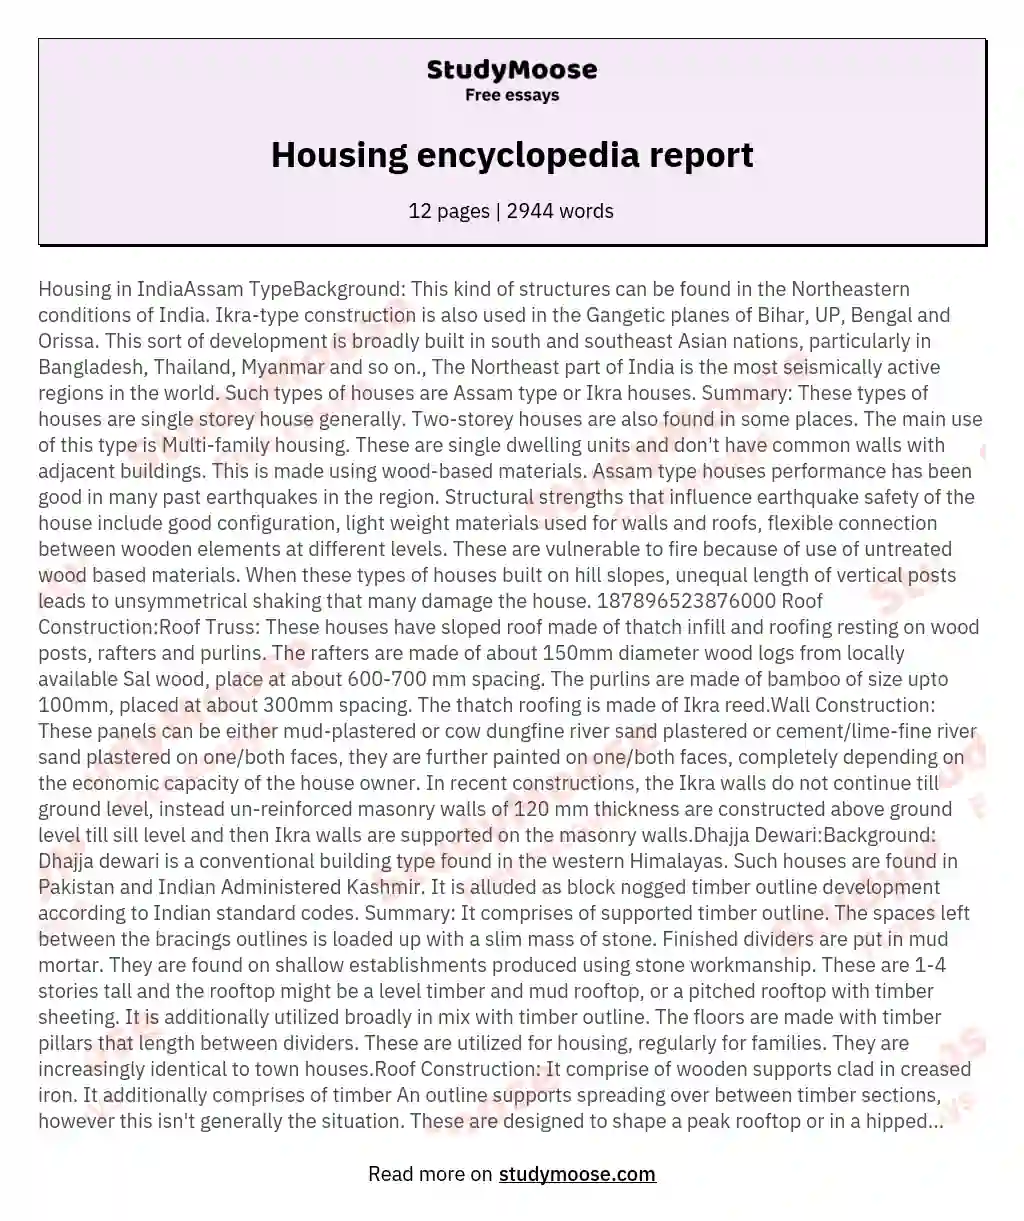 Housing encyclopedia report essay